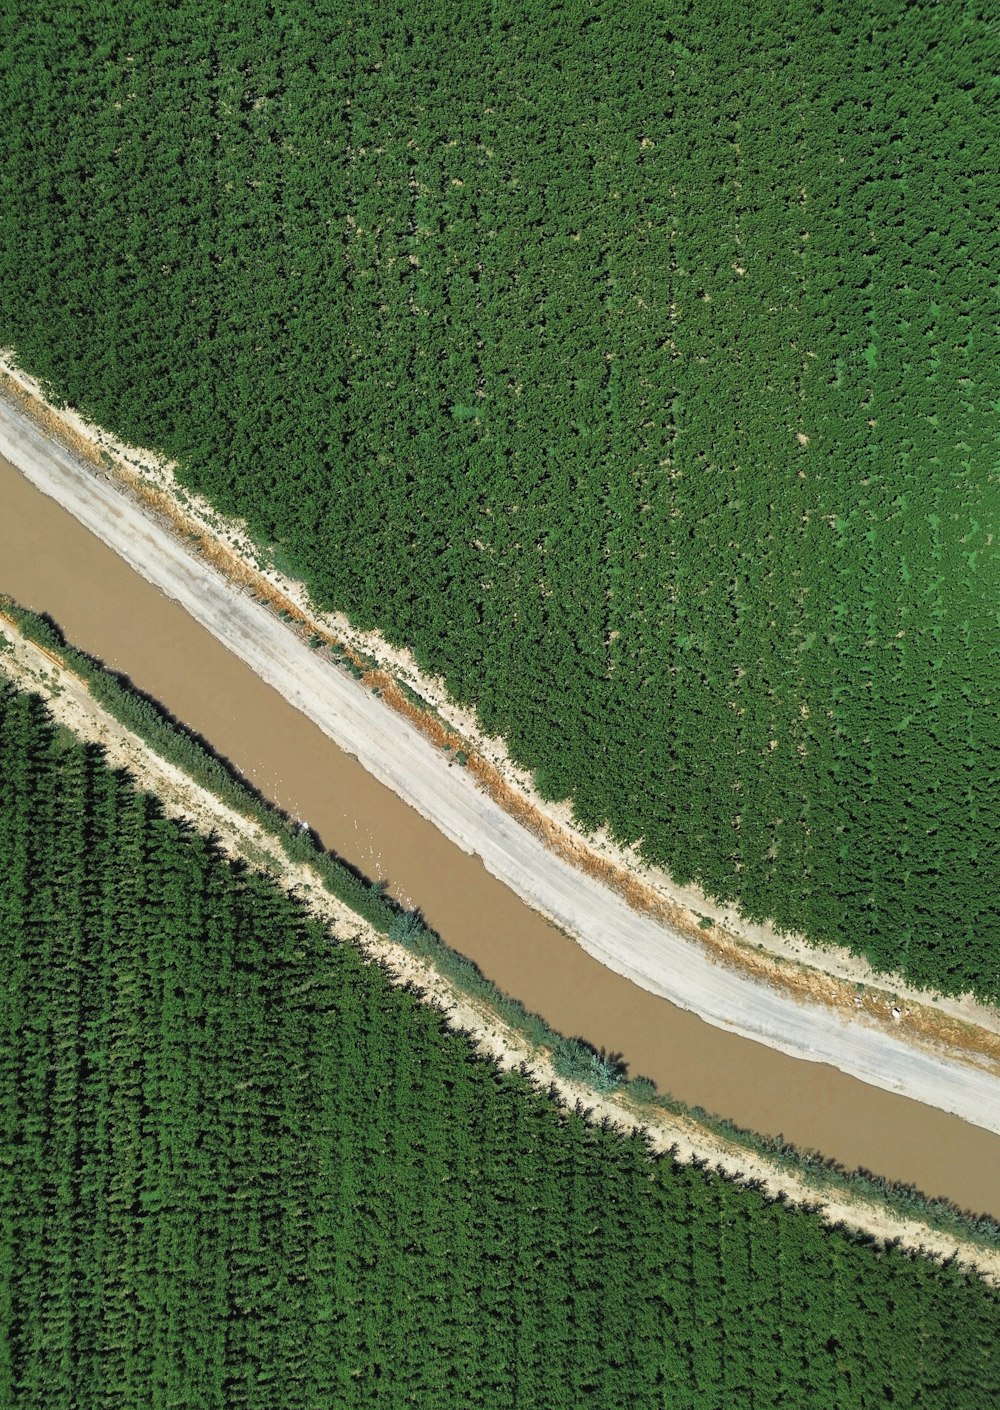 an aerial view of a river running through a green field